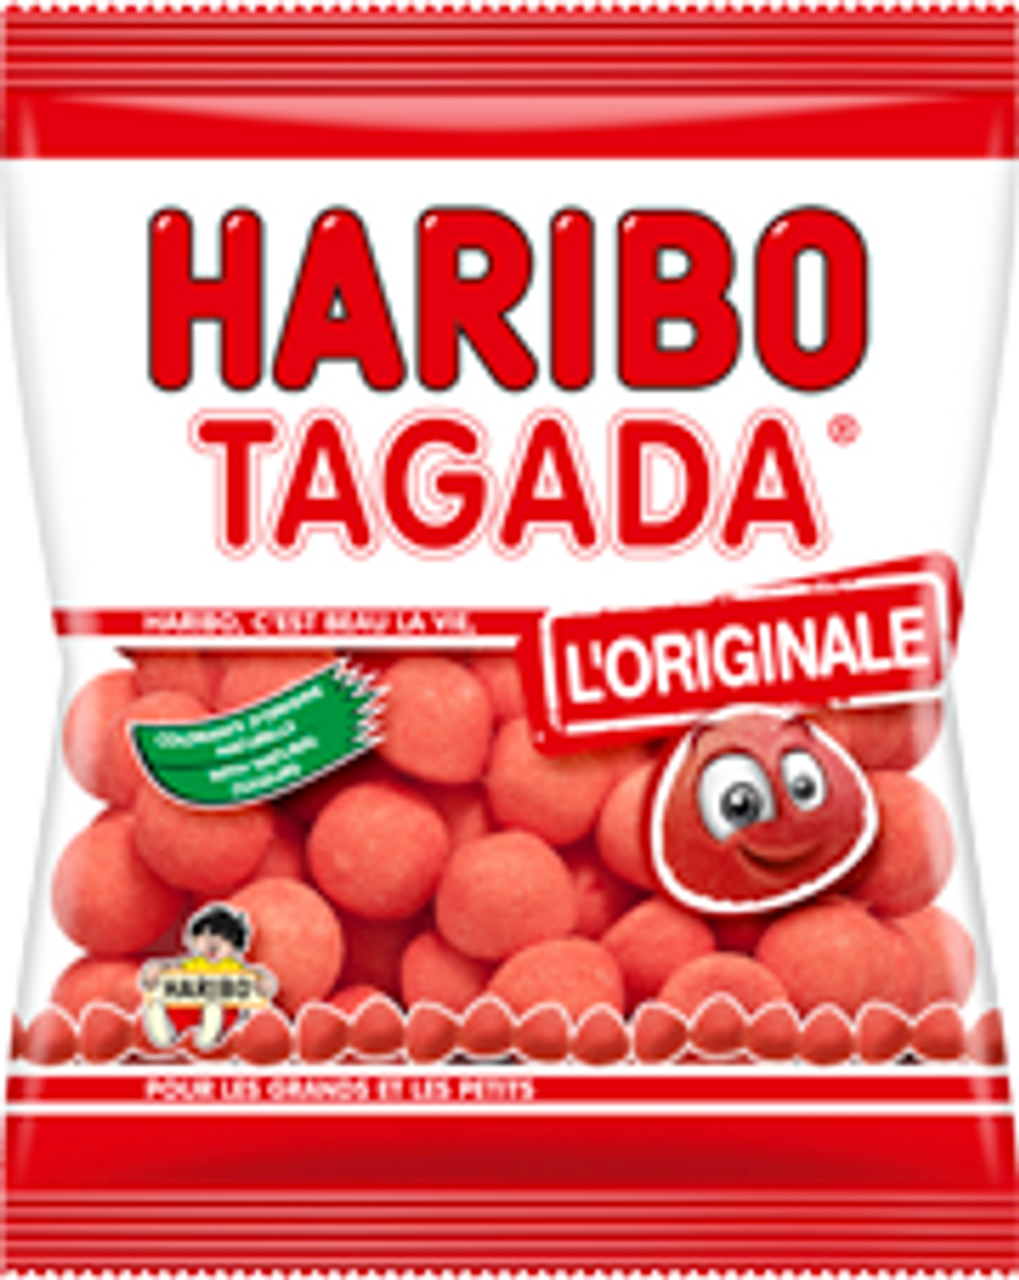 Tagada haribo, haribo tagada, fraise tagada, tagada bonbon